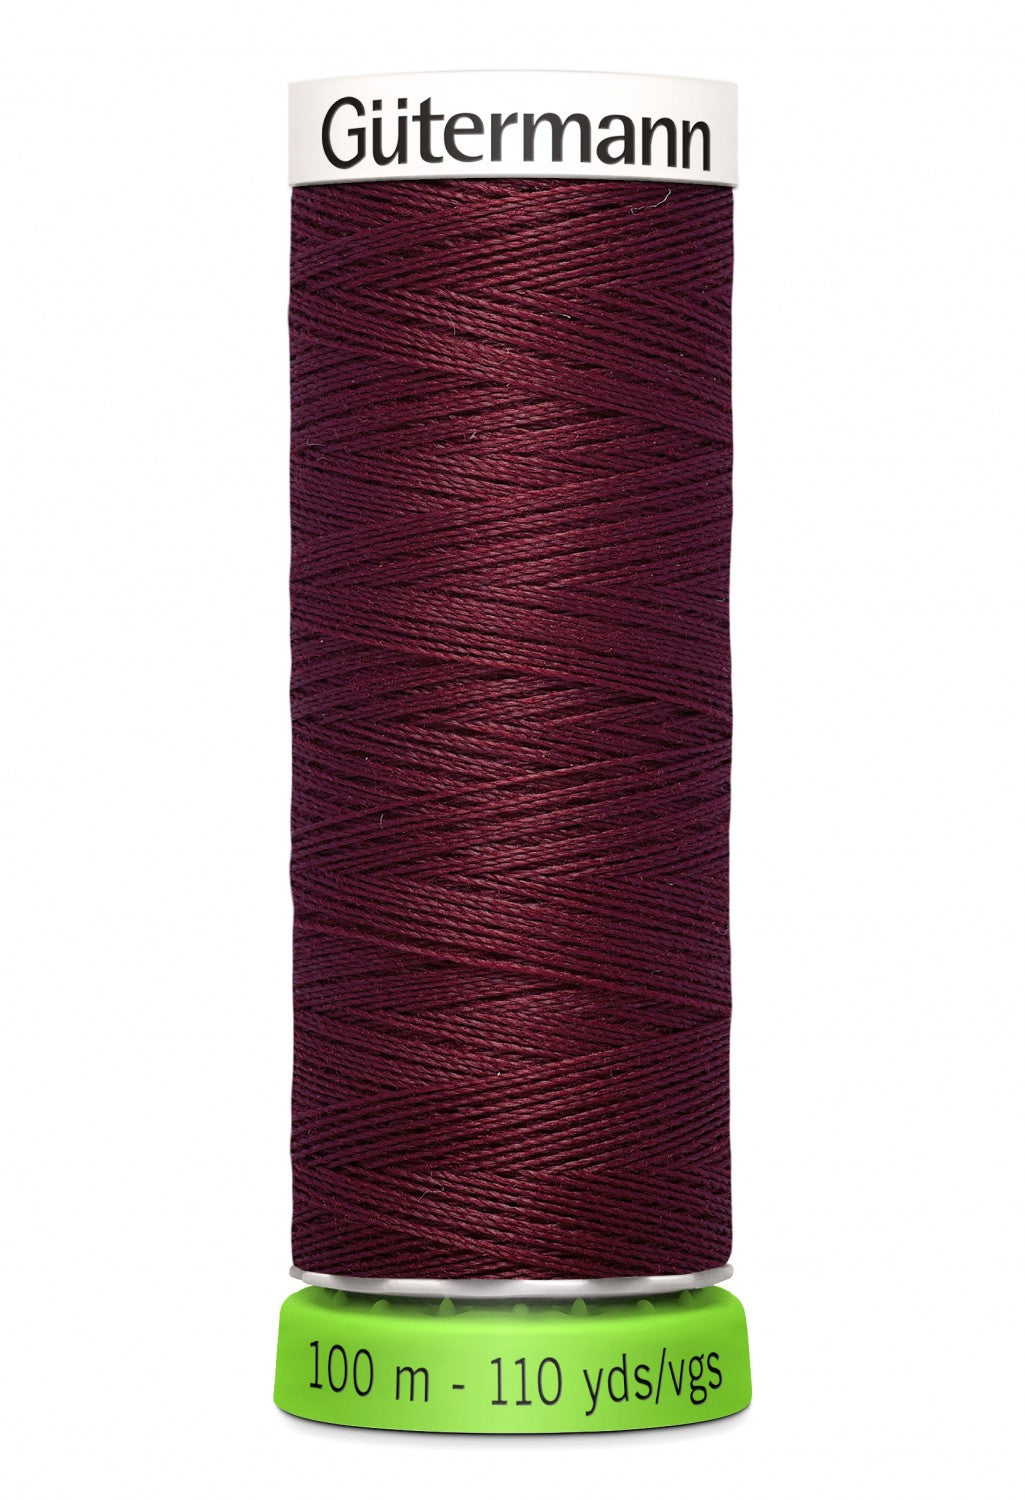 Hobbs Tuscany Cotton Wool Blend Batting - Twin Size 72 x 96